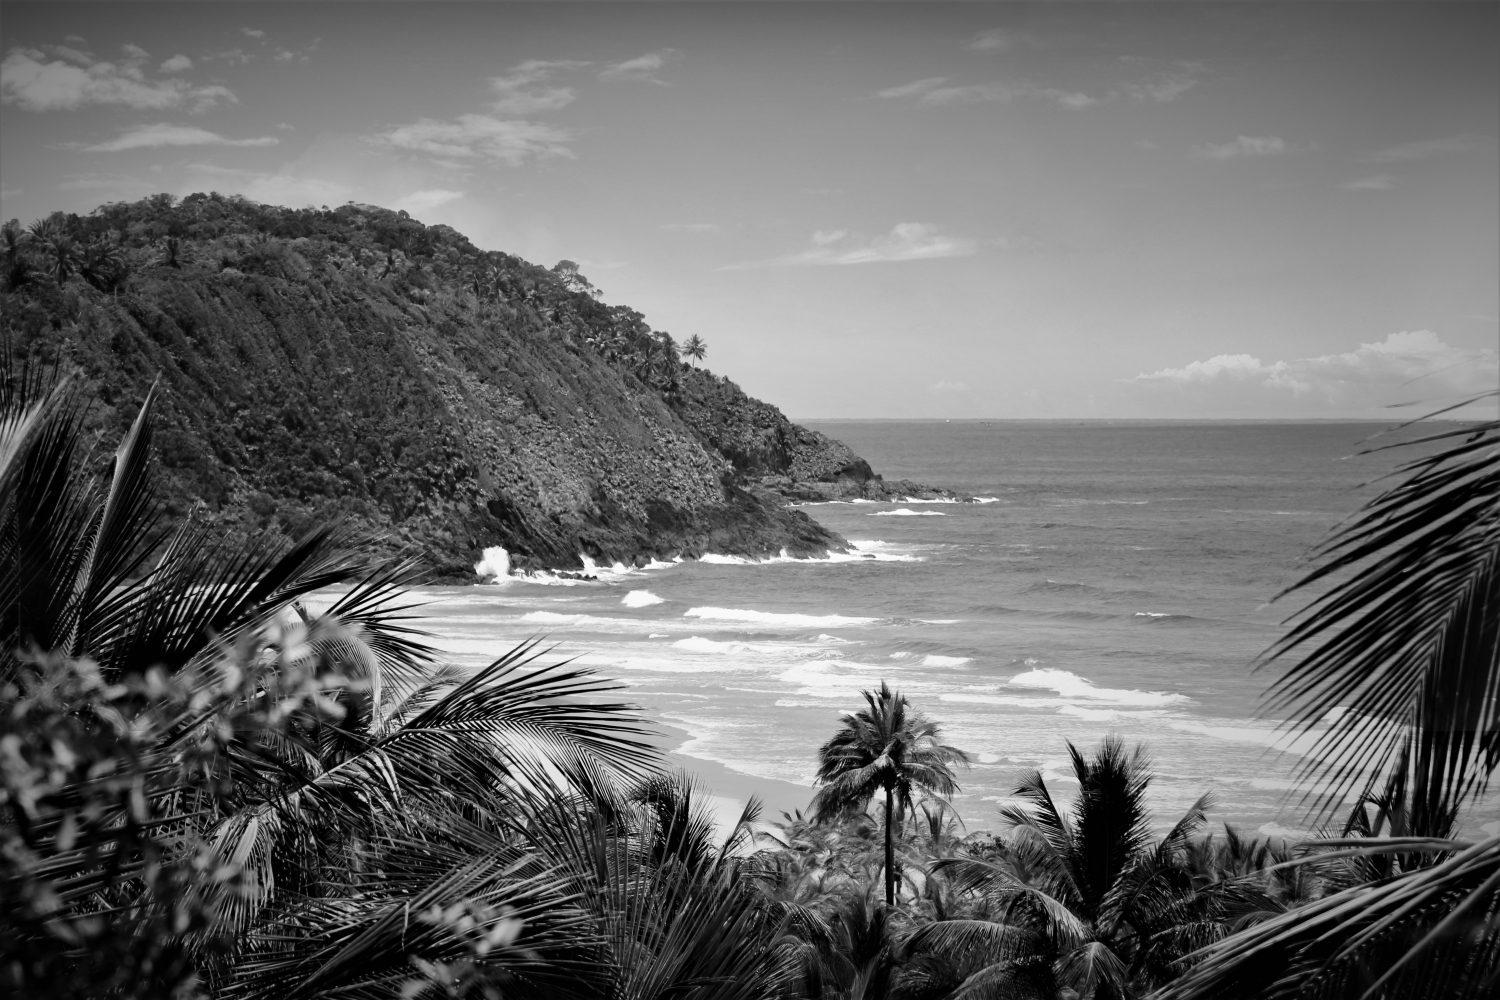 Itacarezinho beach in Black and White.